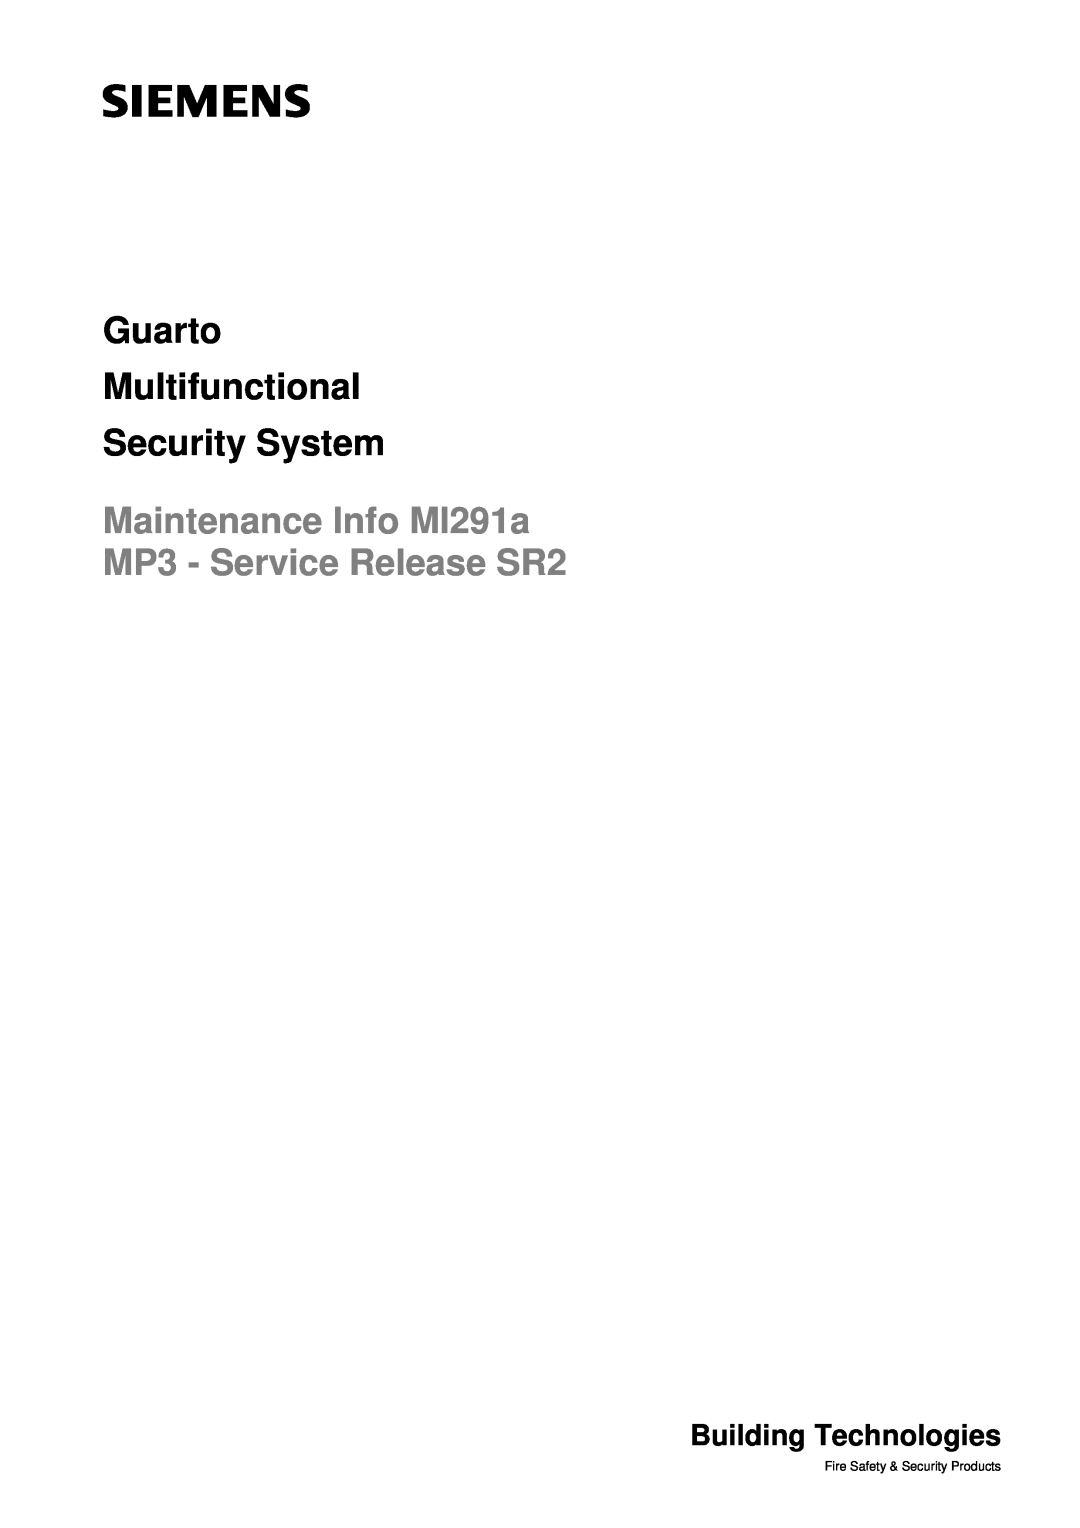 Siemens MI291A manual Guarto Multifunctional Security System, Maintenance Info MI291a MP3 - Service Release SR2 